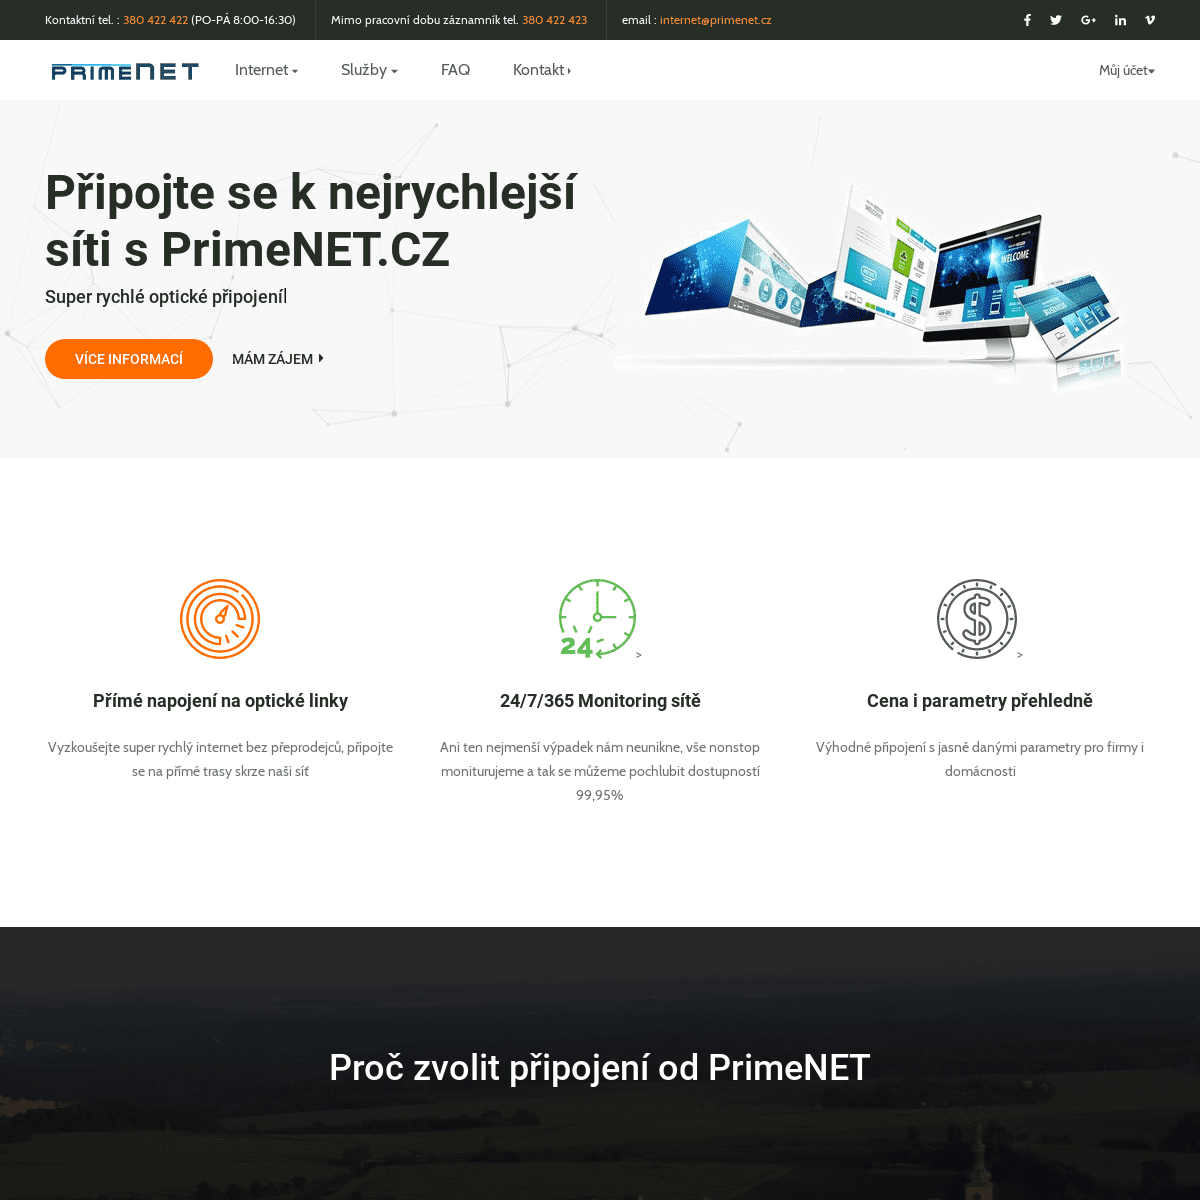 A complete backup of primenet.cz